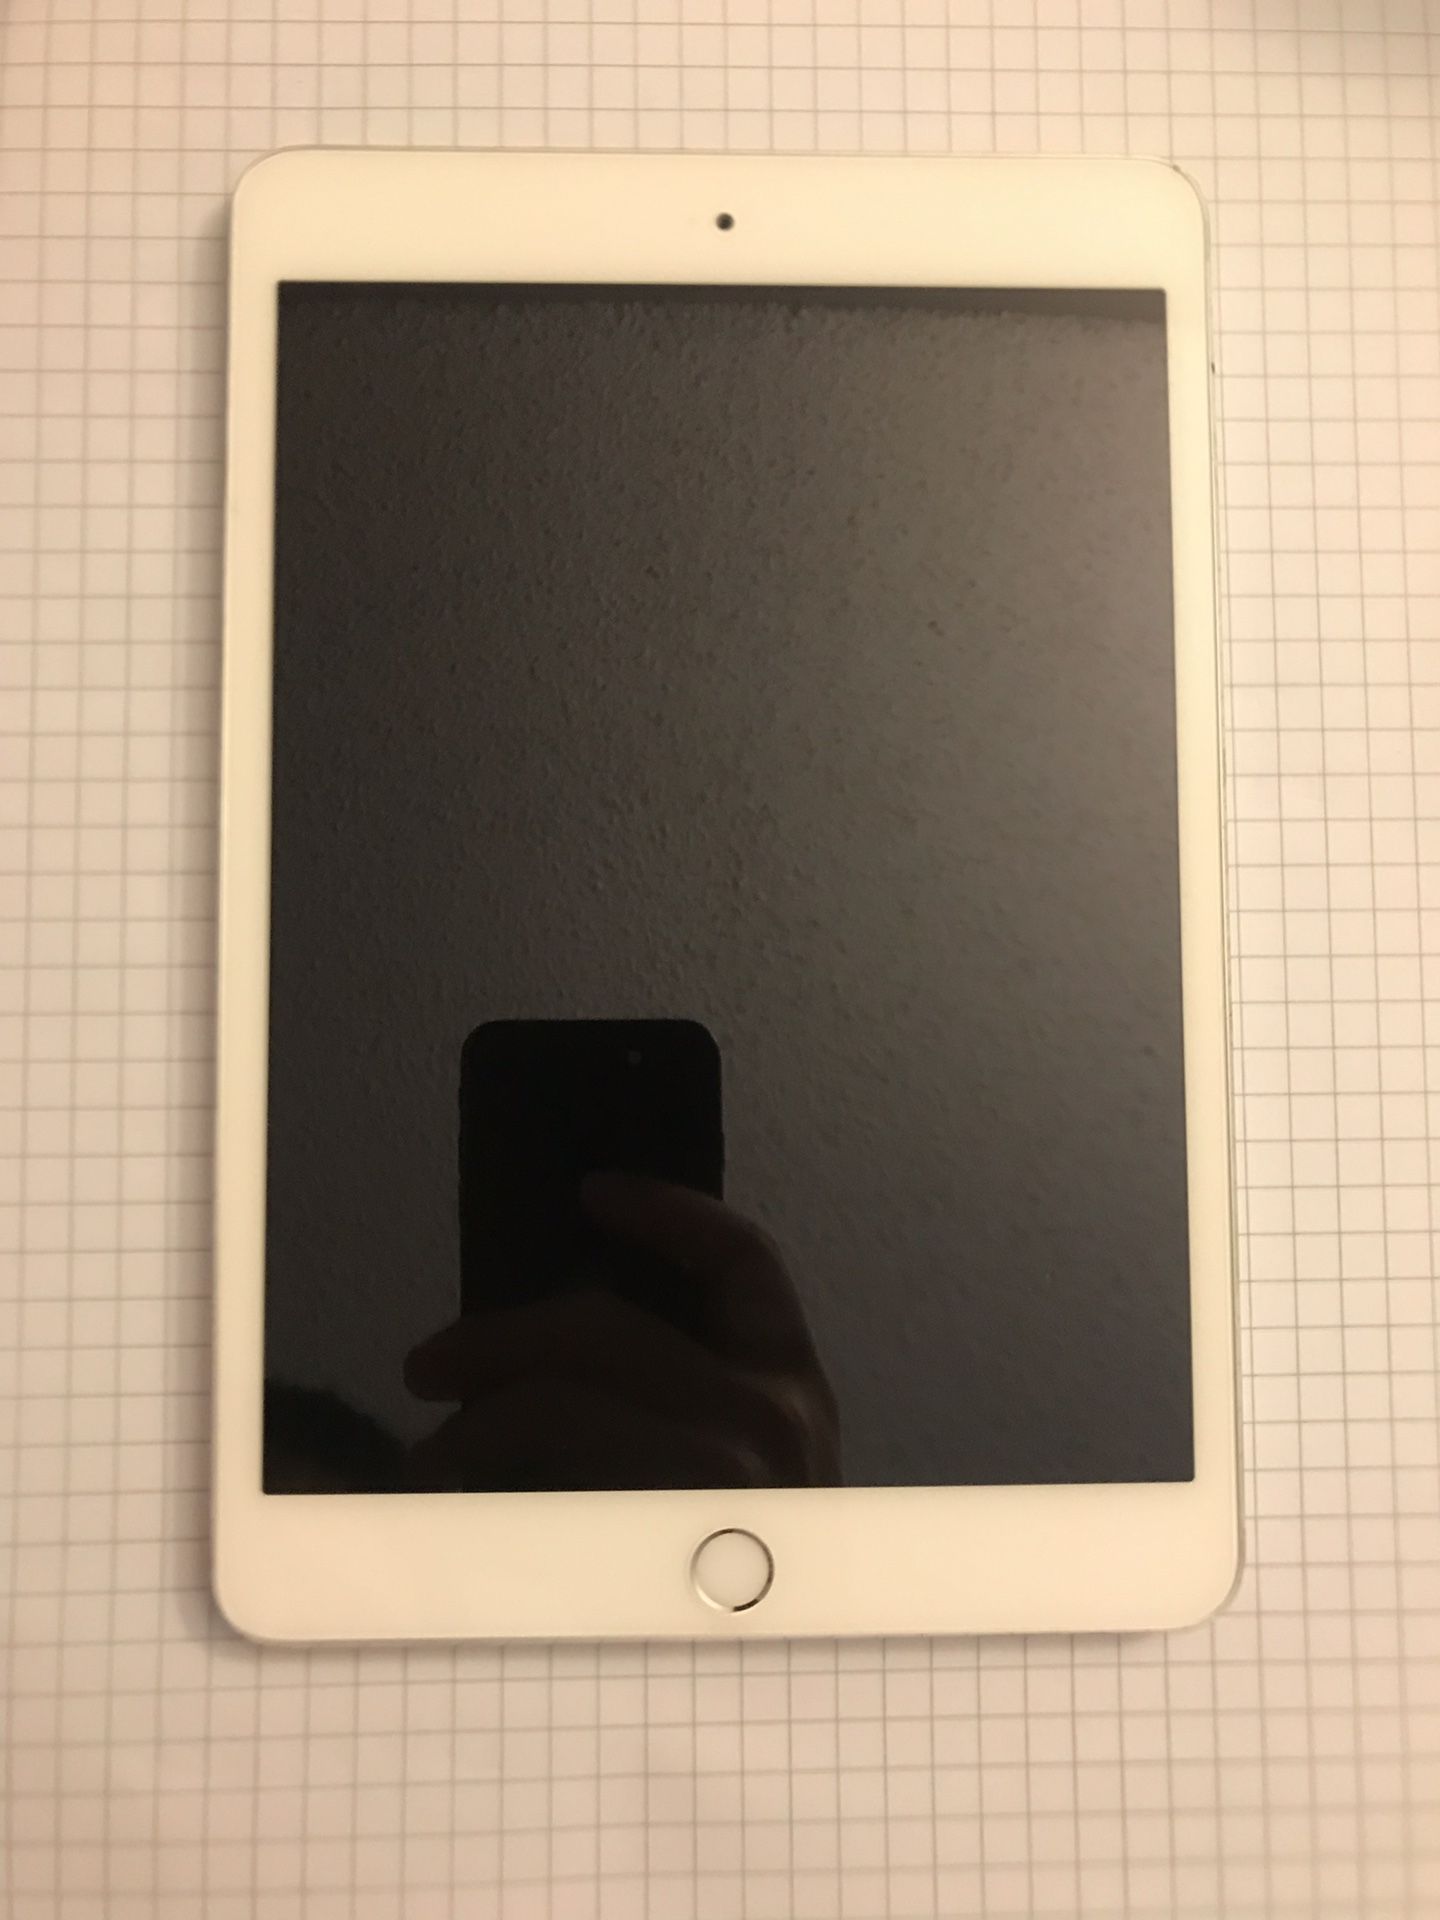 iPad mini3, 64GB, grey, good condition